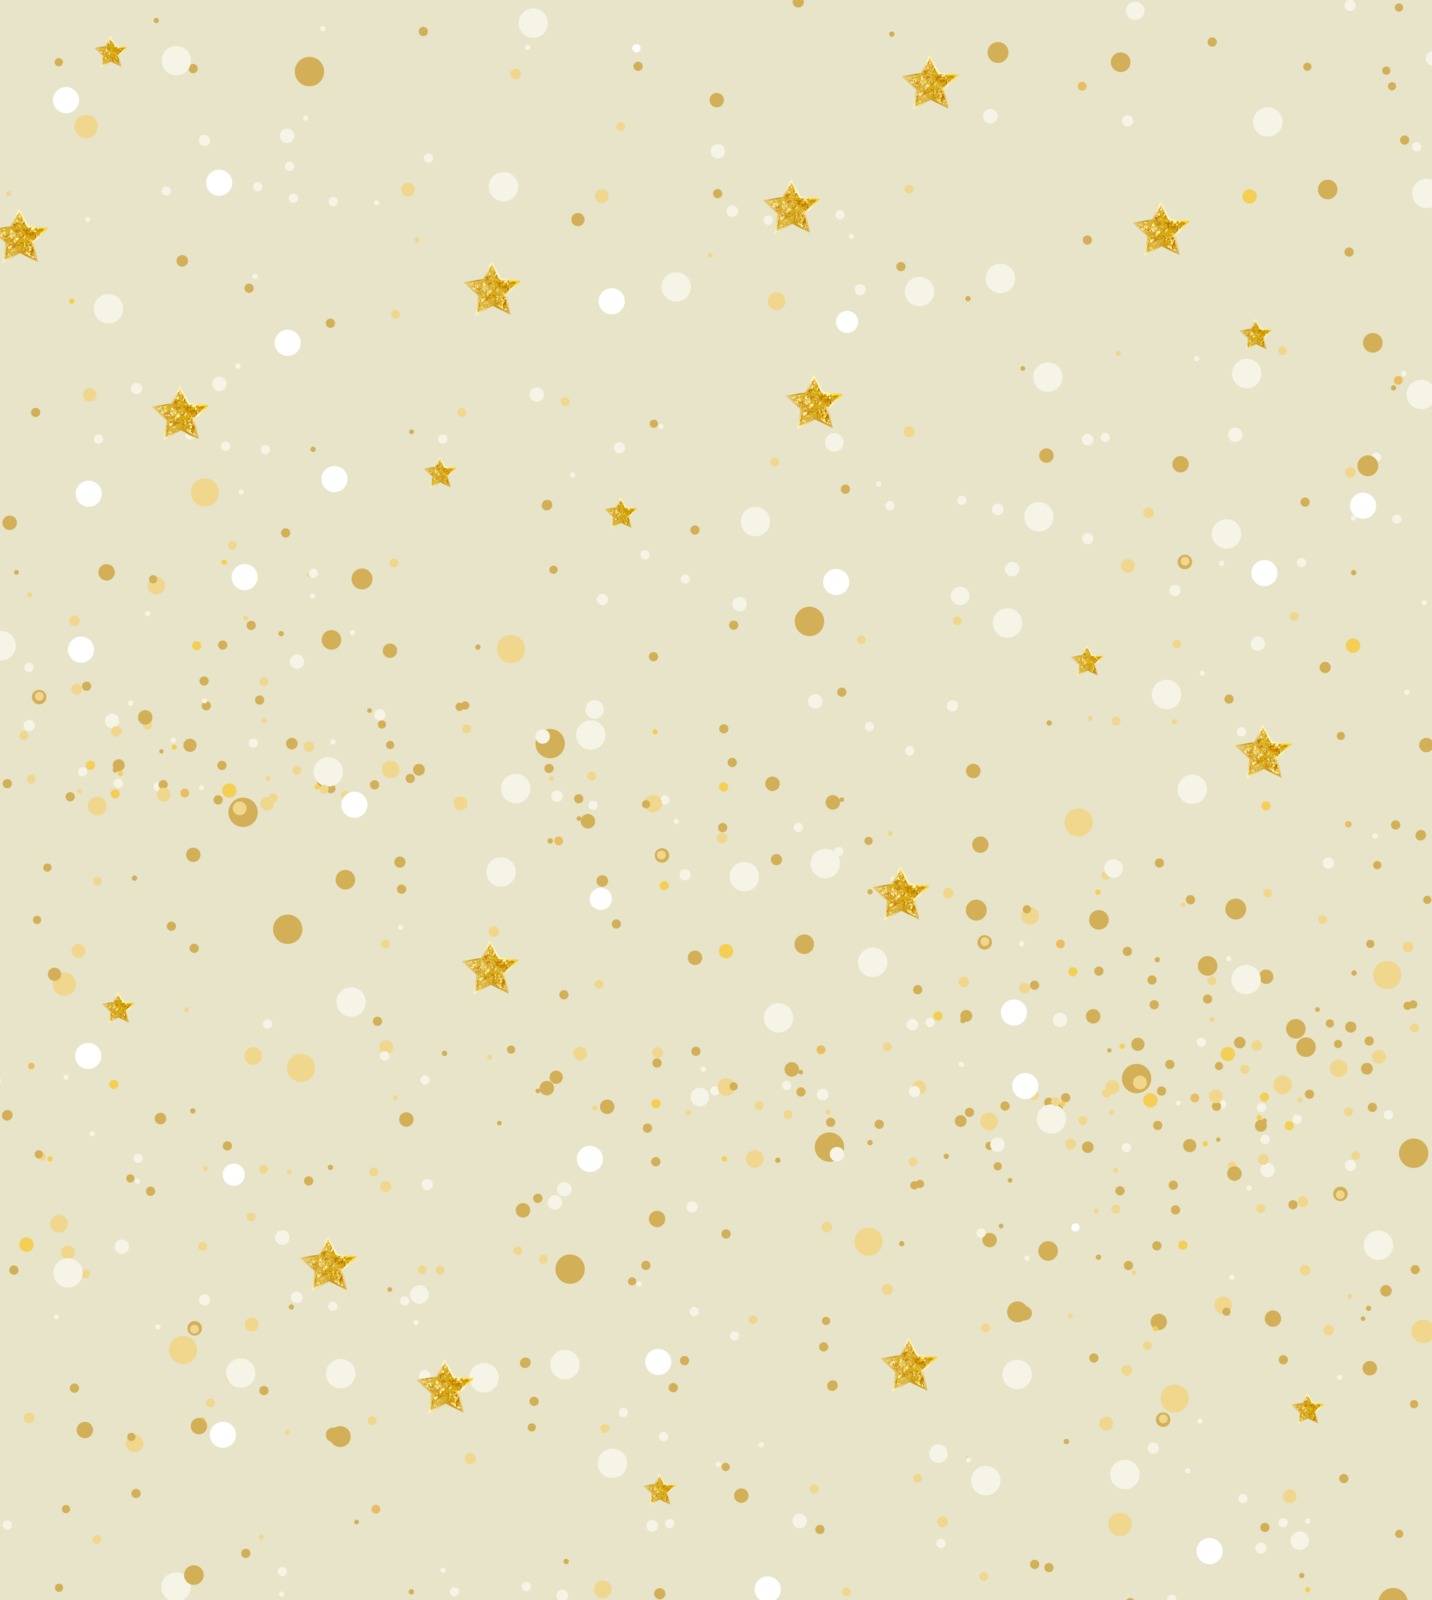 Gold glitter and stars by odina222